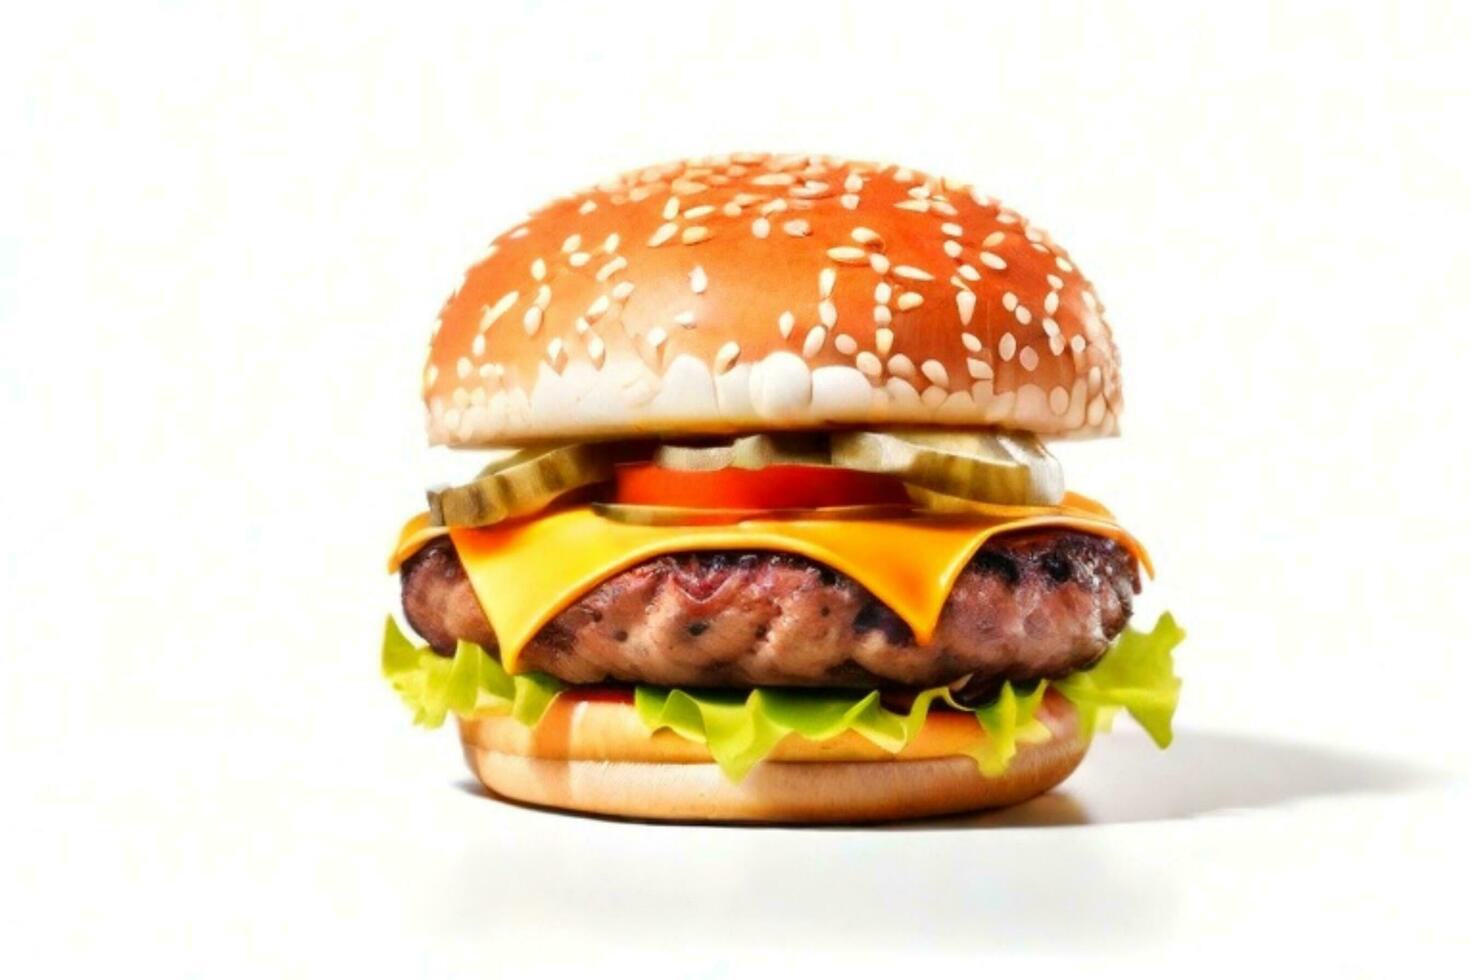 AI generated fresh burger isolated on white background. AI generated photo